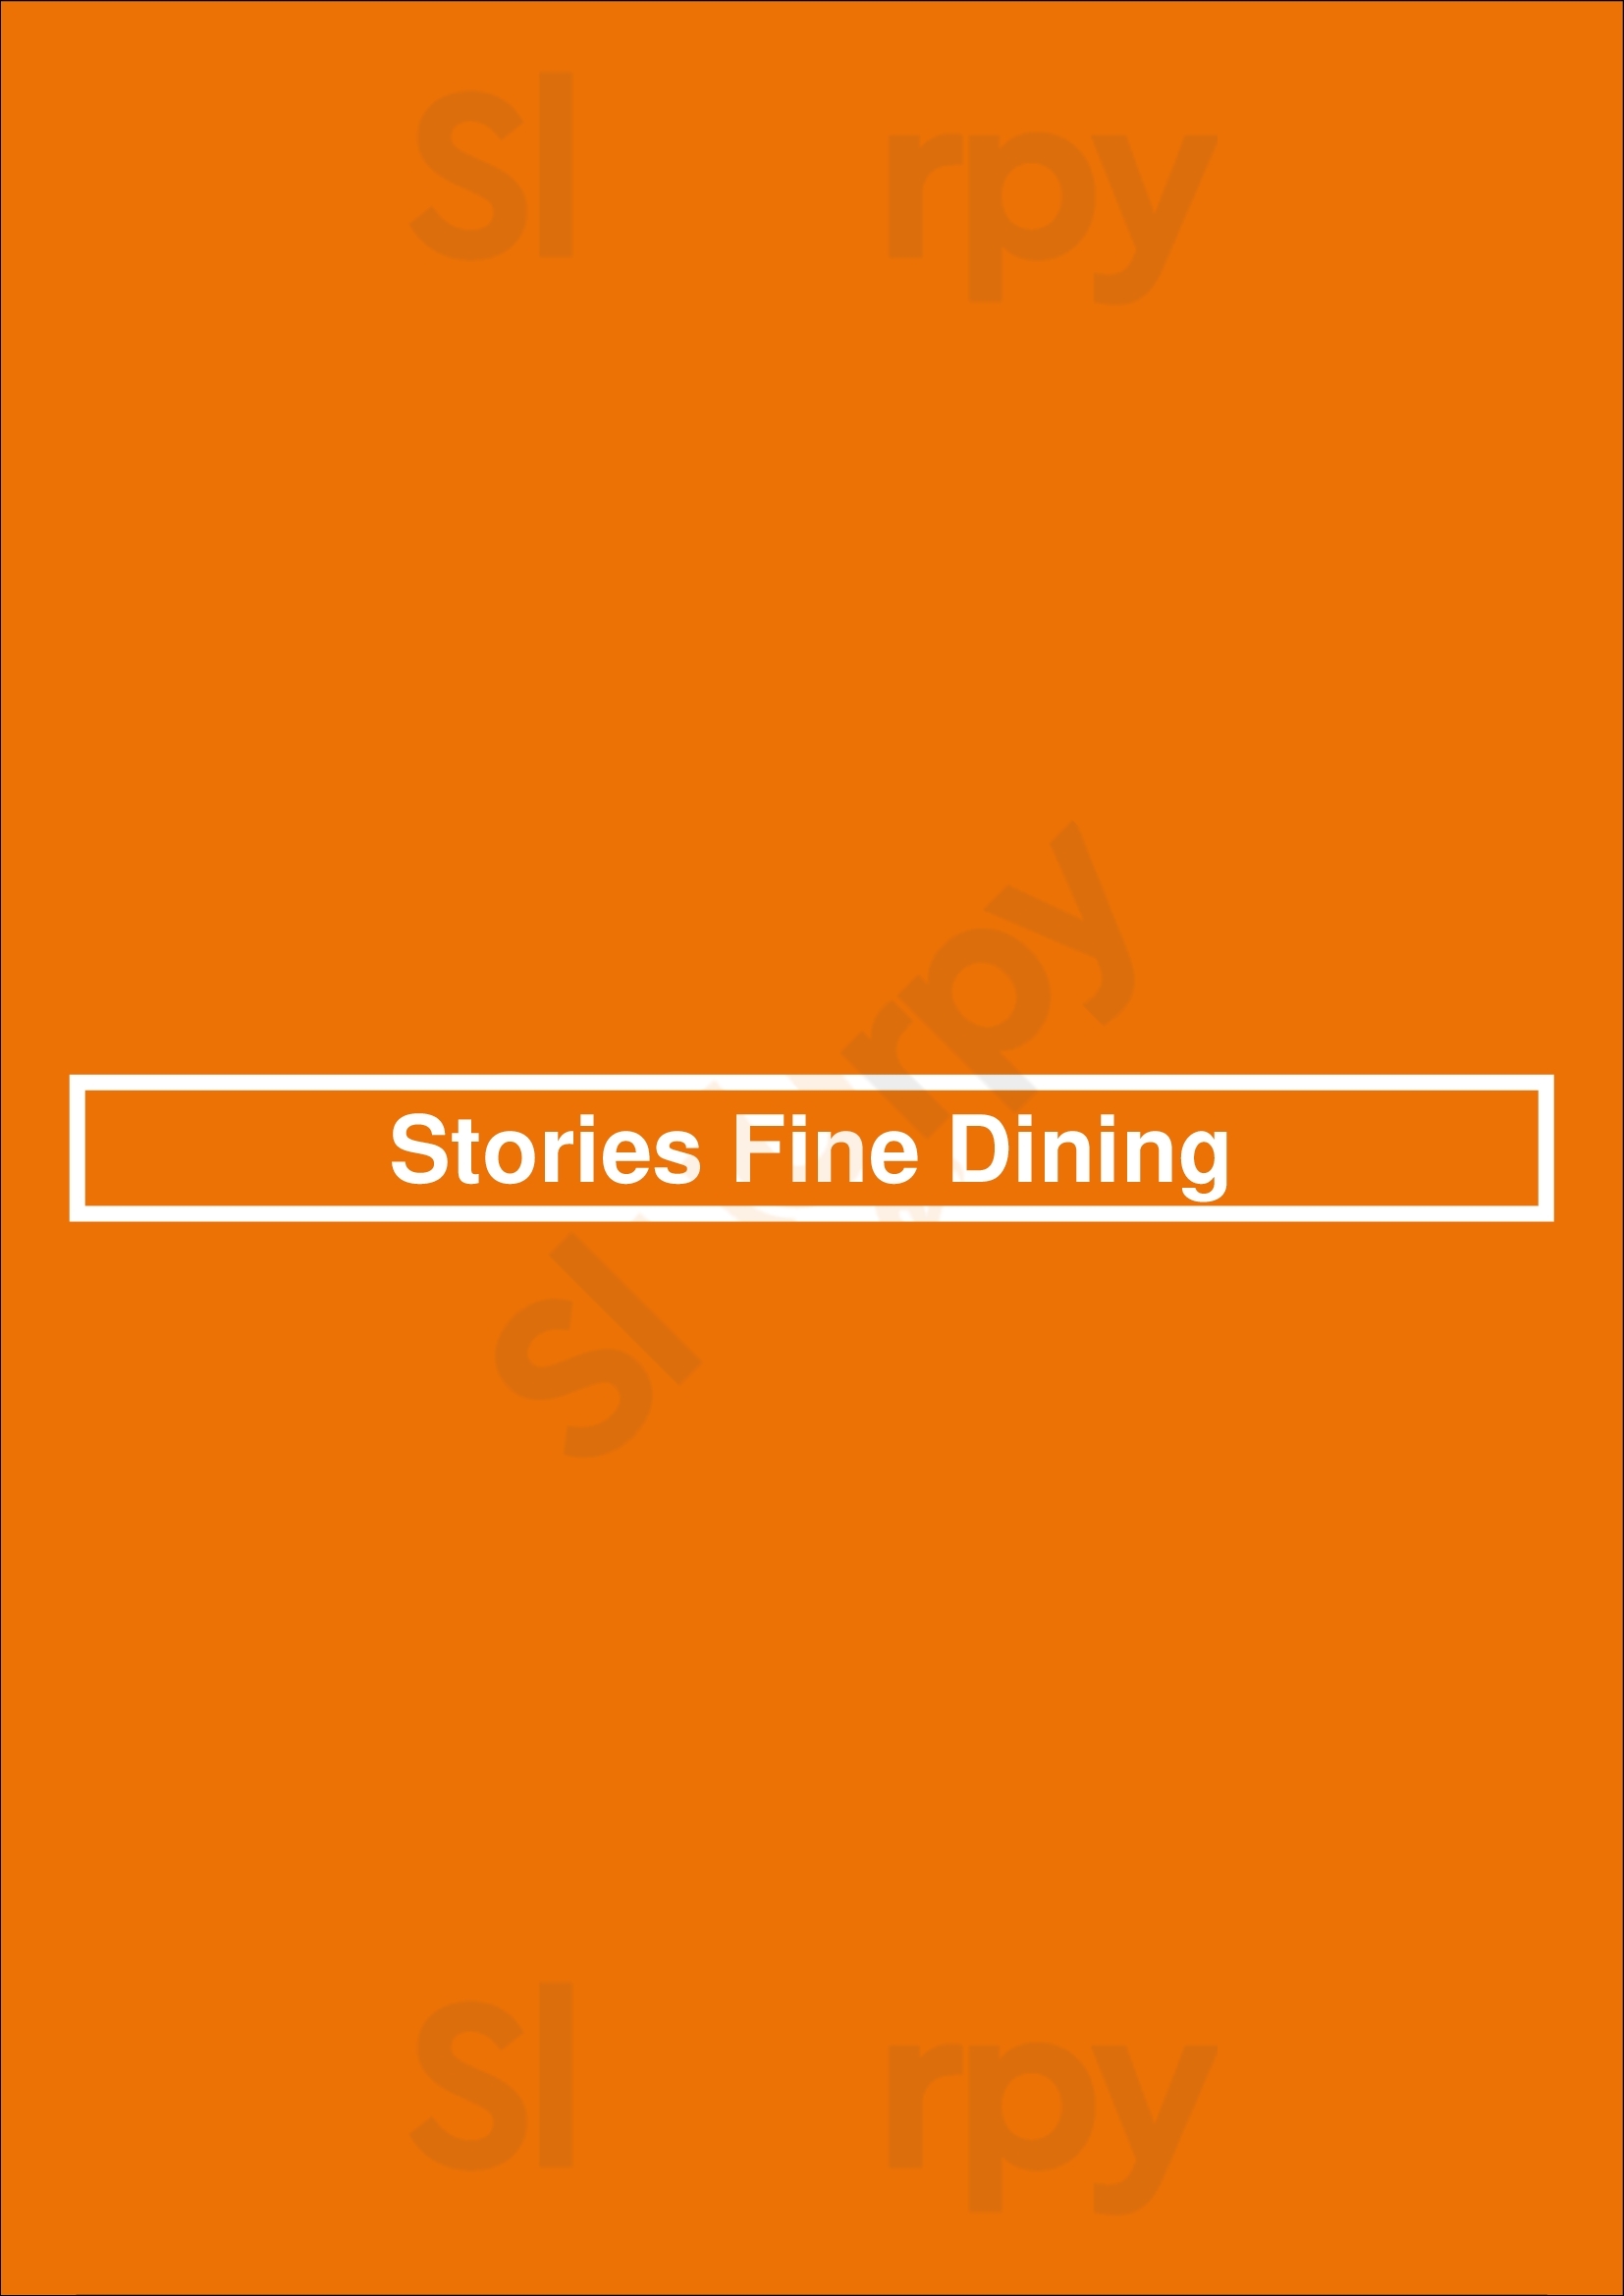 Stories Fine Dining Halifax Menu - 1